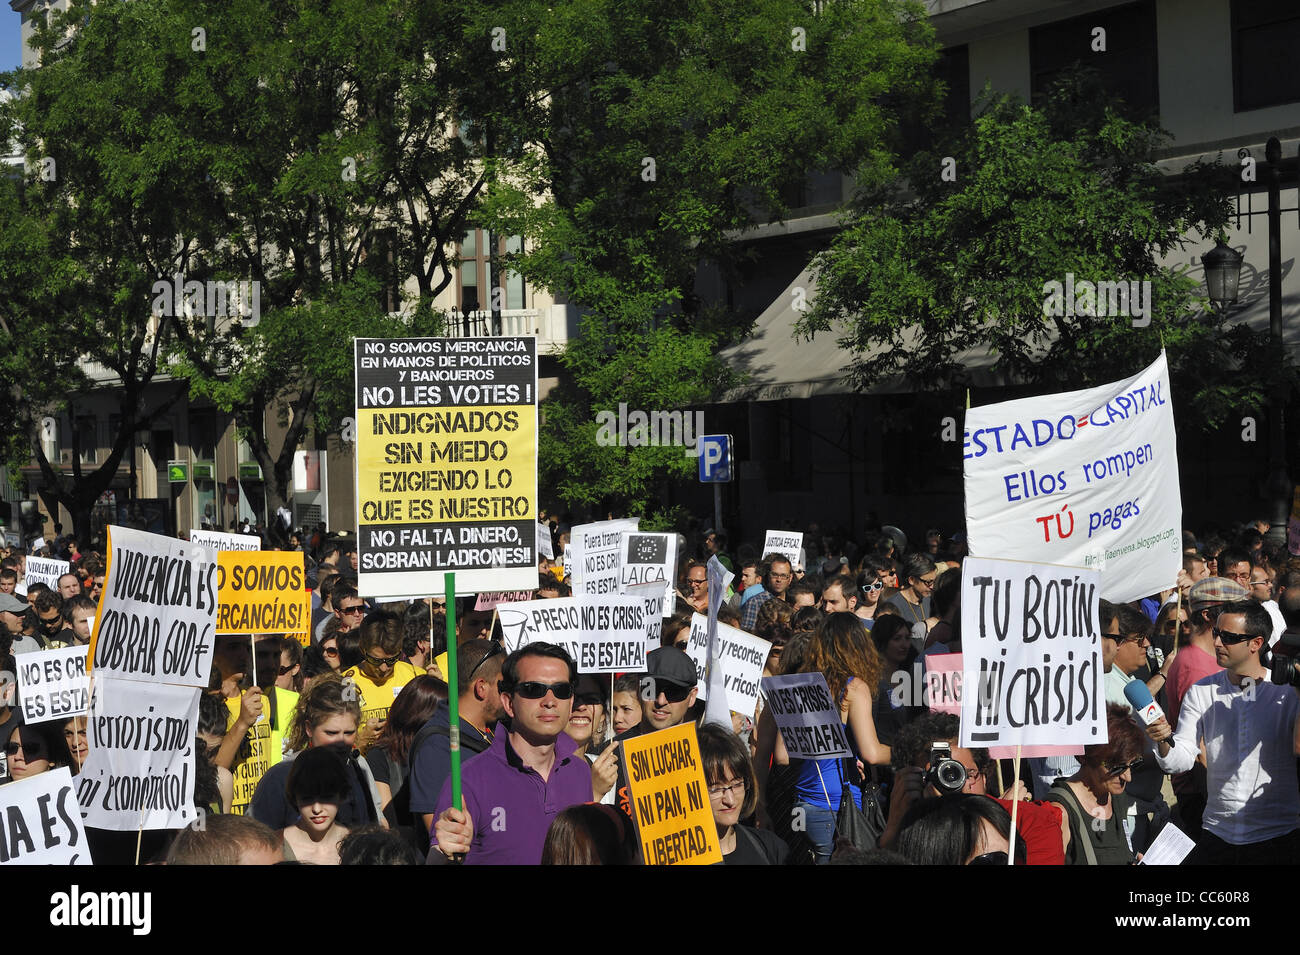 demonstration of indignados 15 may 2011, Madrid, Spain Stock Photo